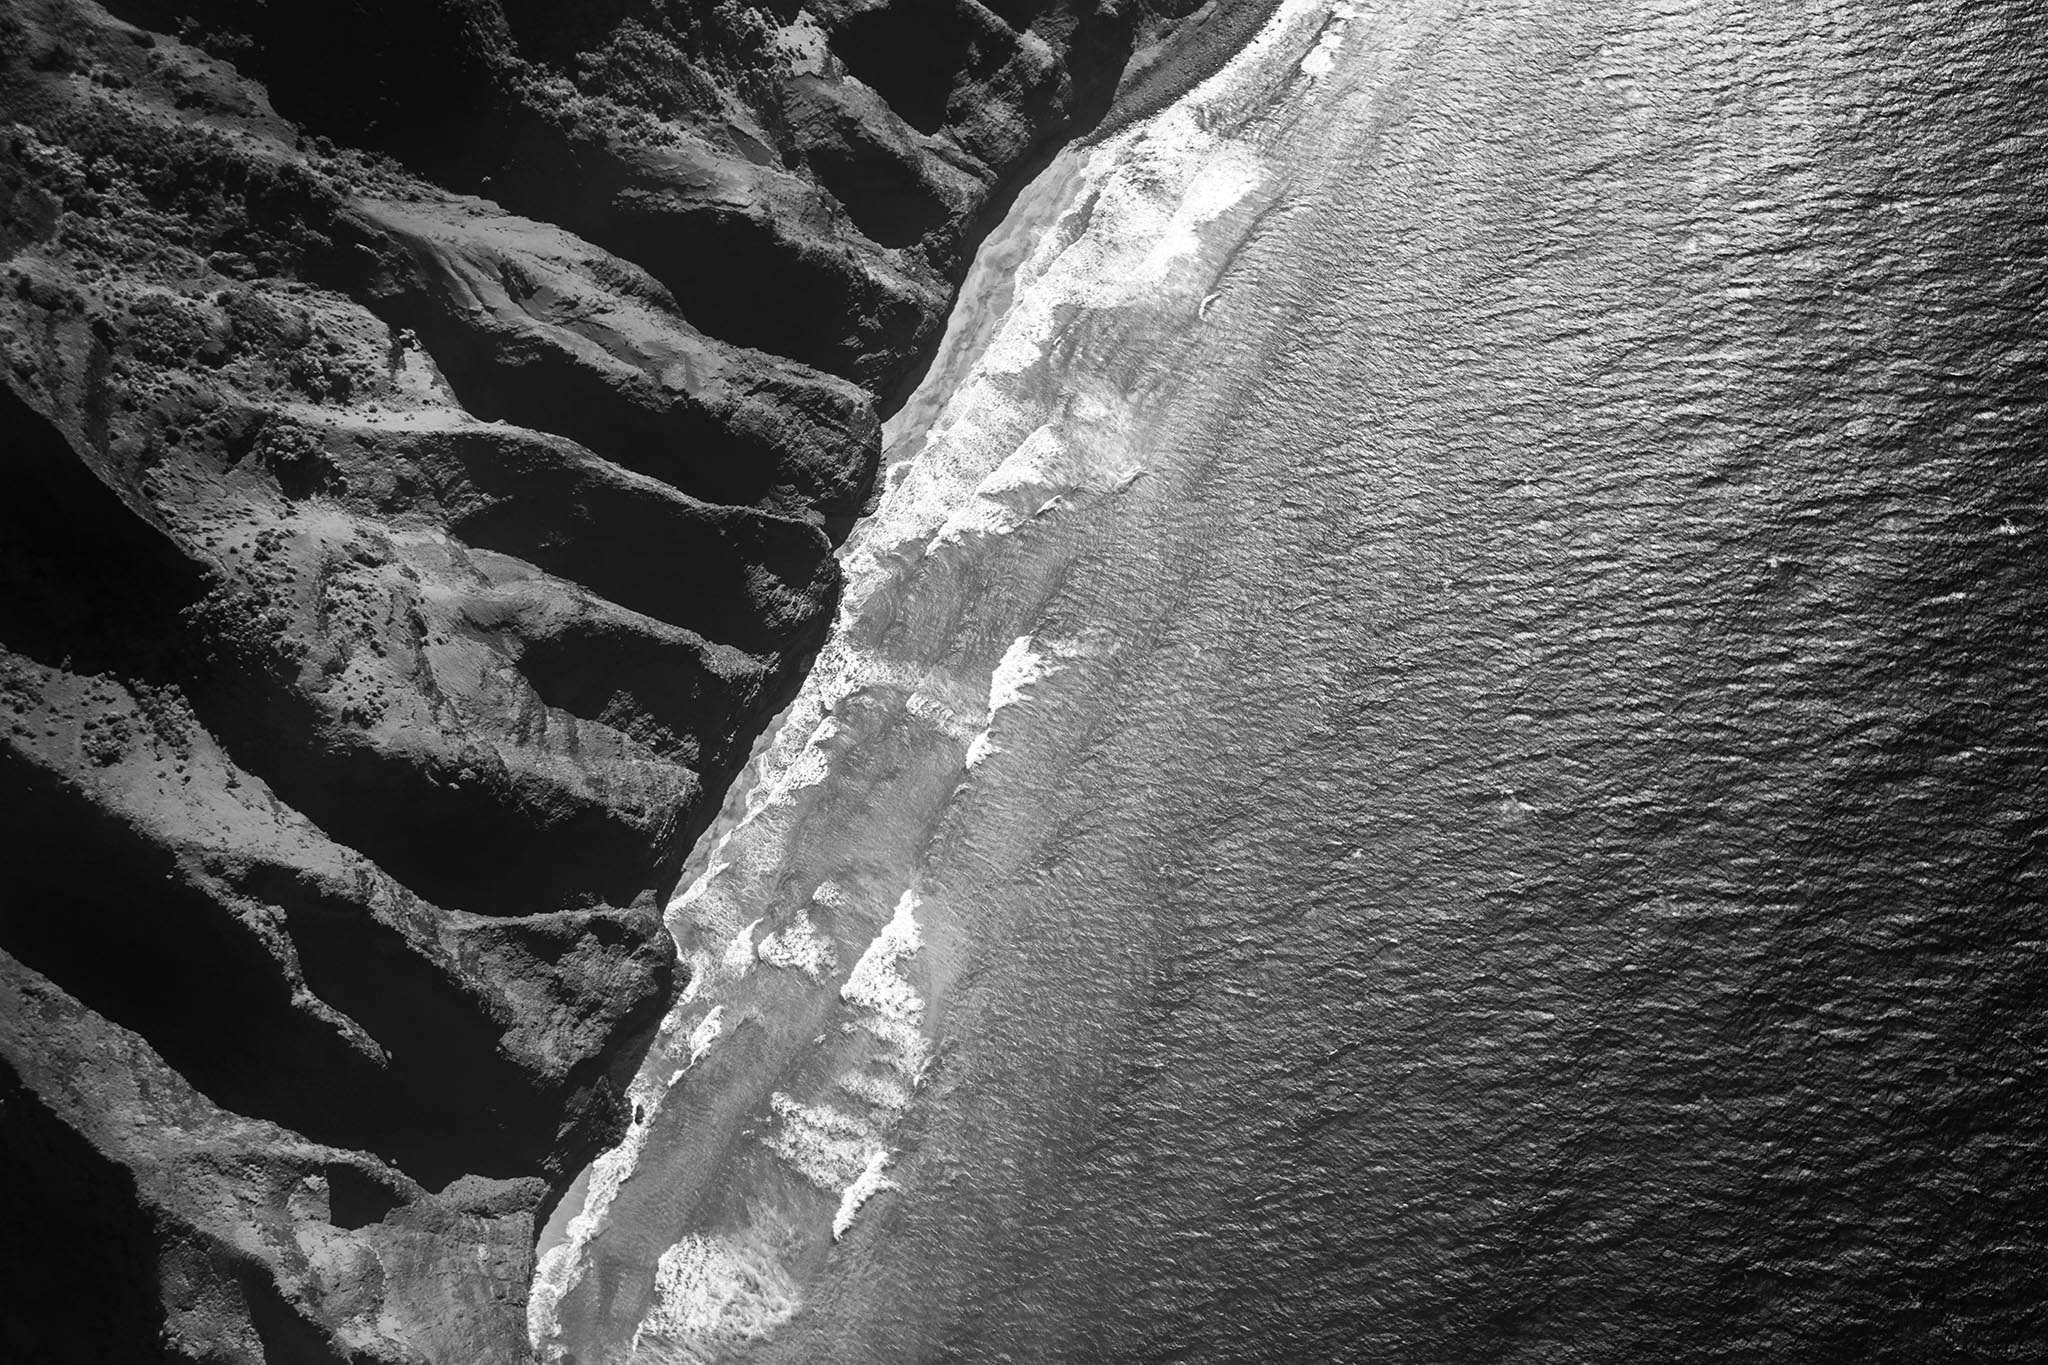 Na Pali coastline in black and white